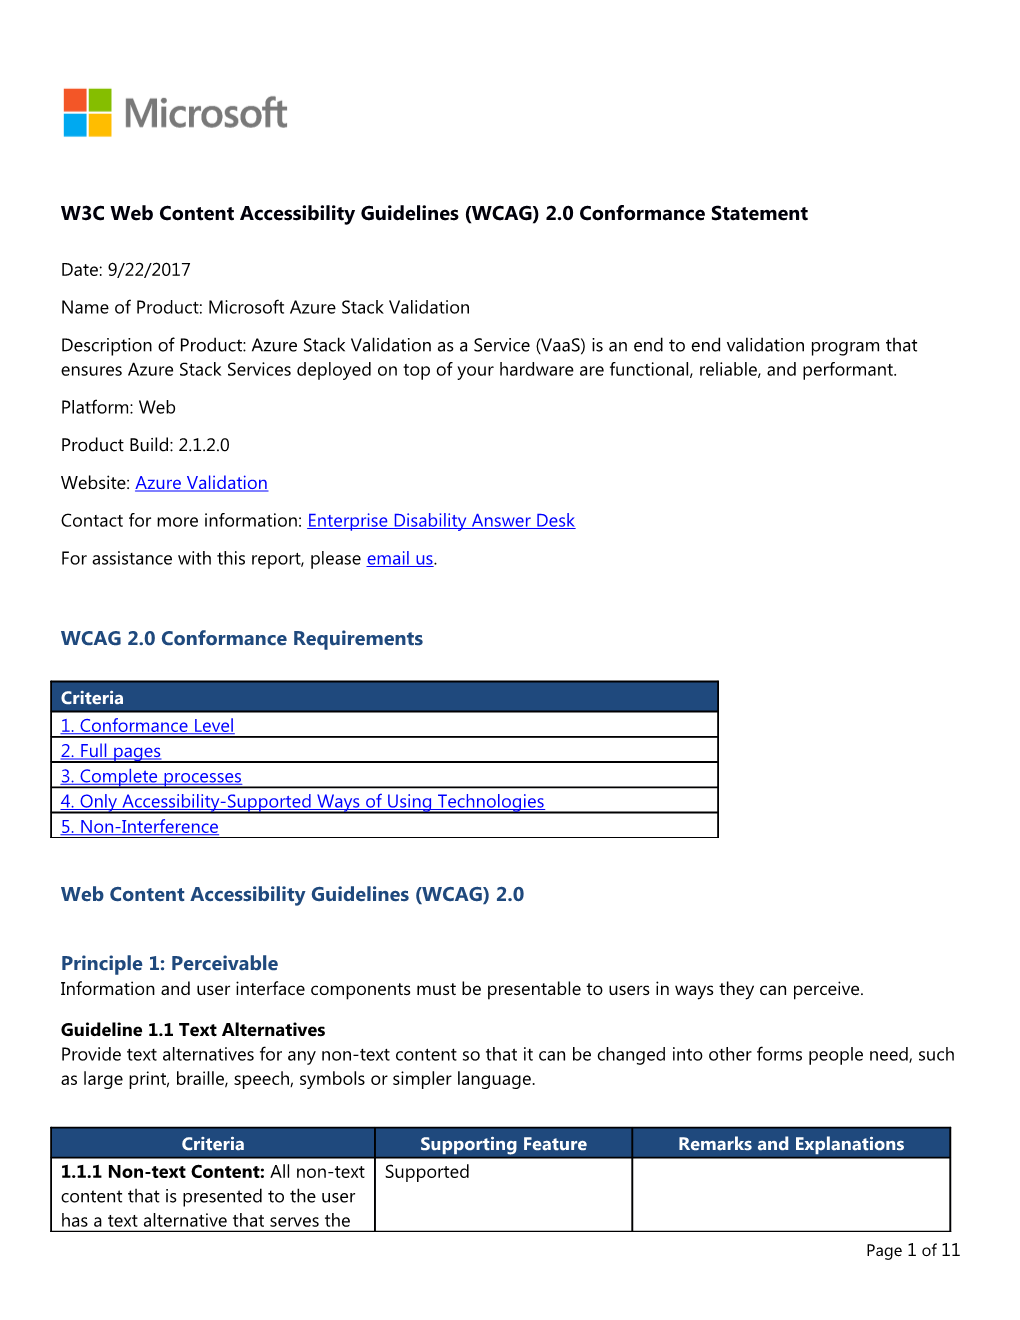 W3C Web Content Accessibility Guidelines (WCAG) 2.0 Conformance Statement s10